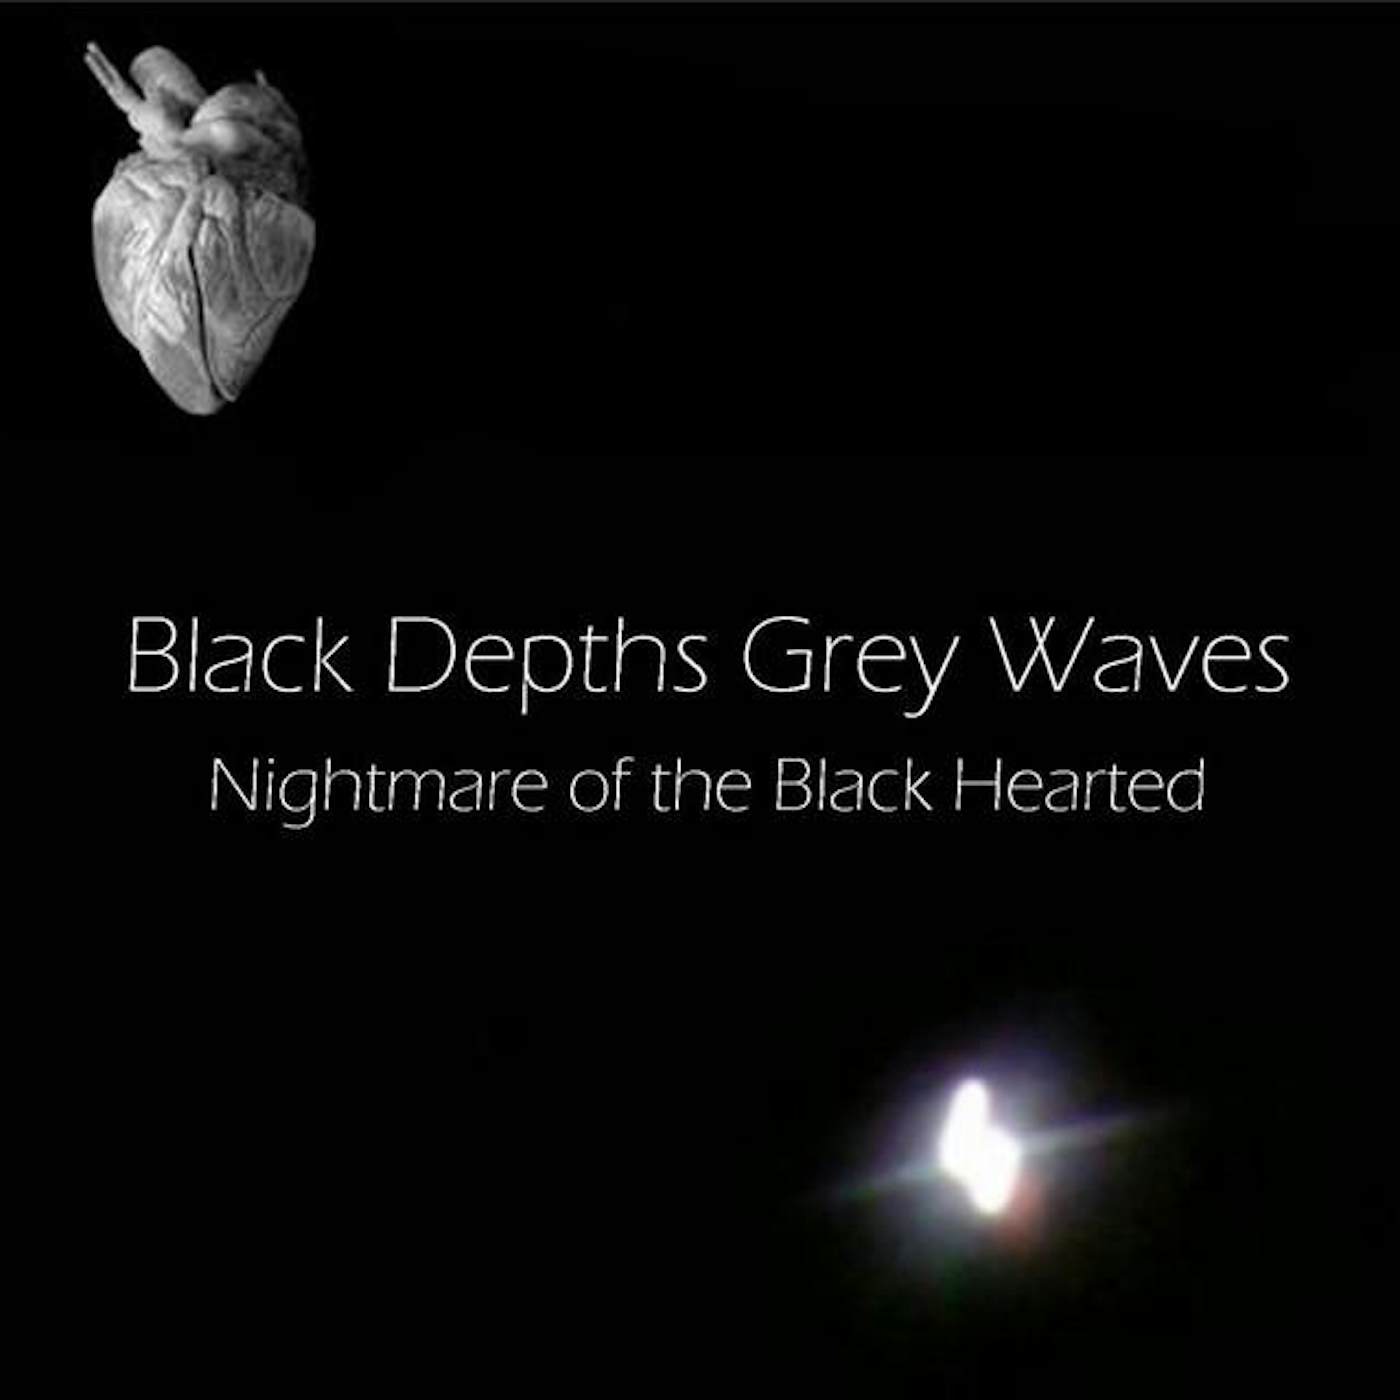 Black Depths, Grey Waves